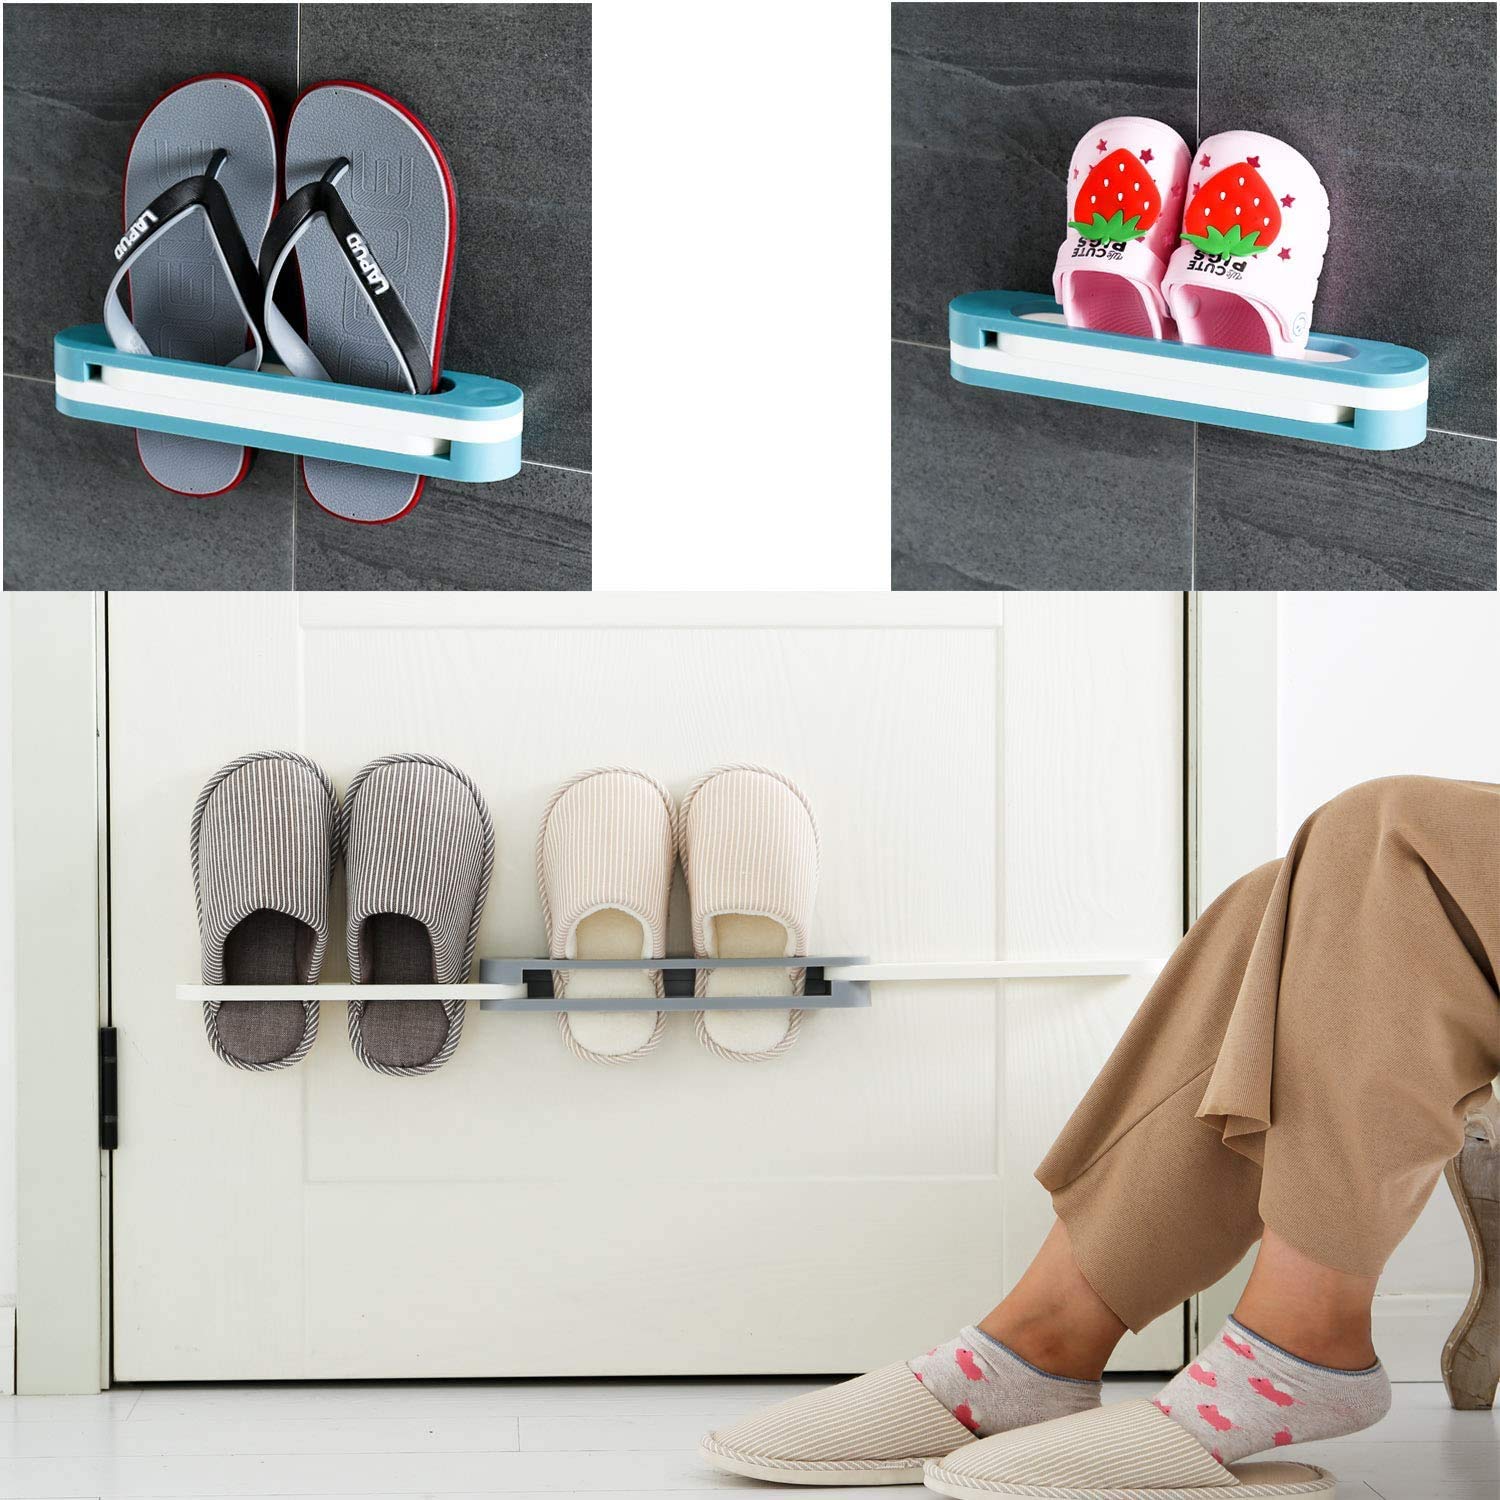 1122 Multifunction Folding Slippers/Shoes Hanger Organizer Rack DeoDap